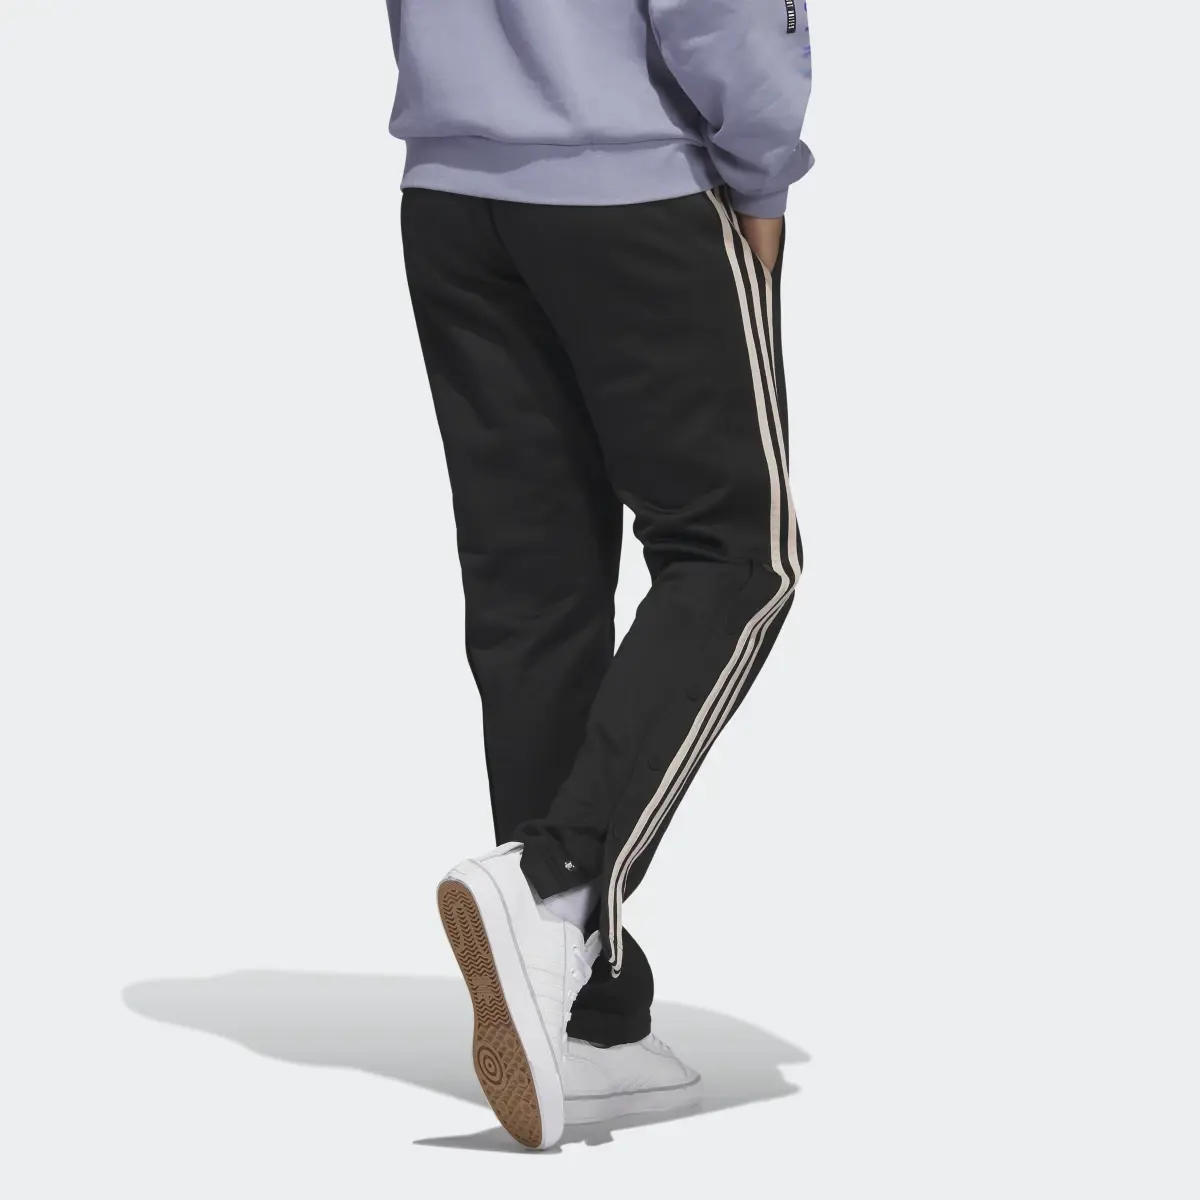 Adidas Originals Basketball Warm-Up Pants. 3